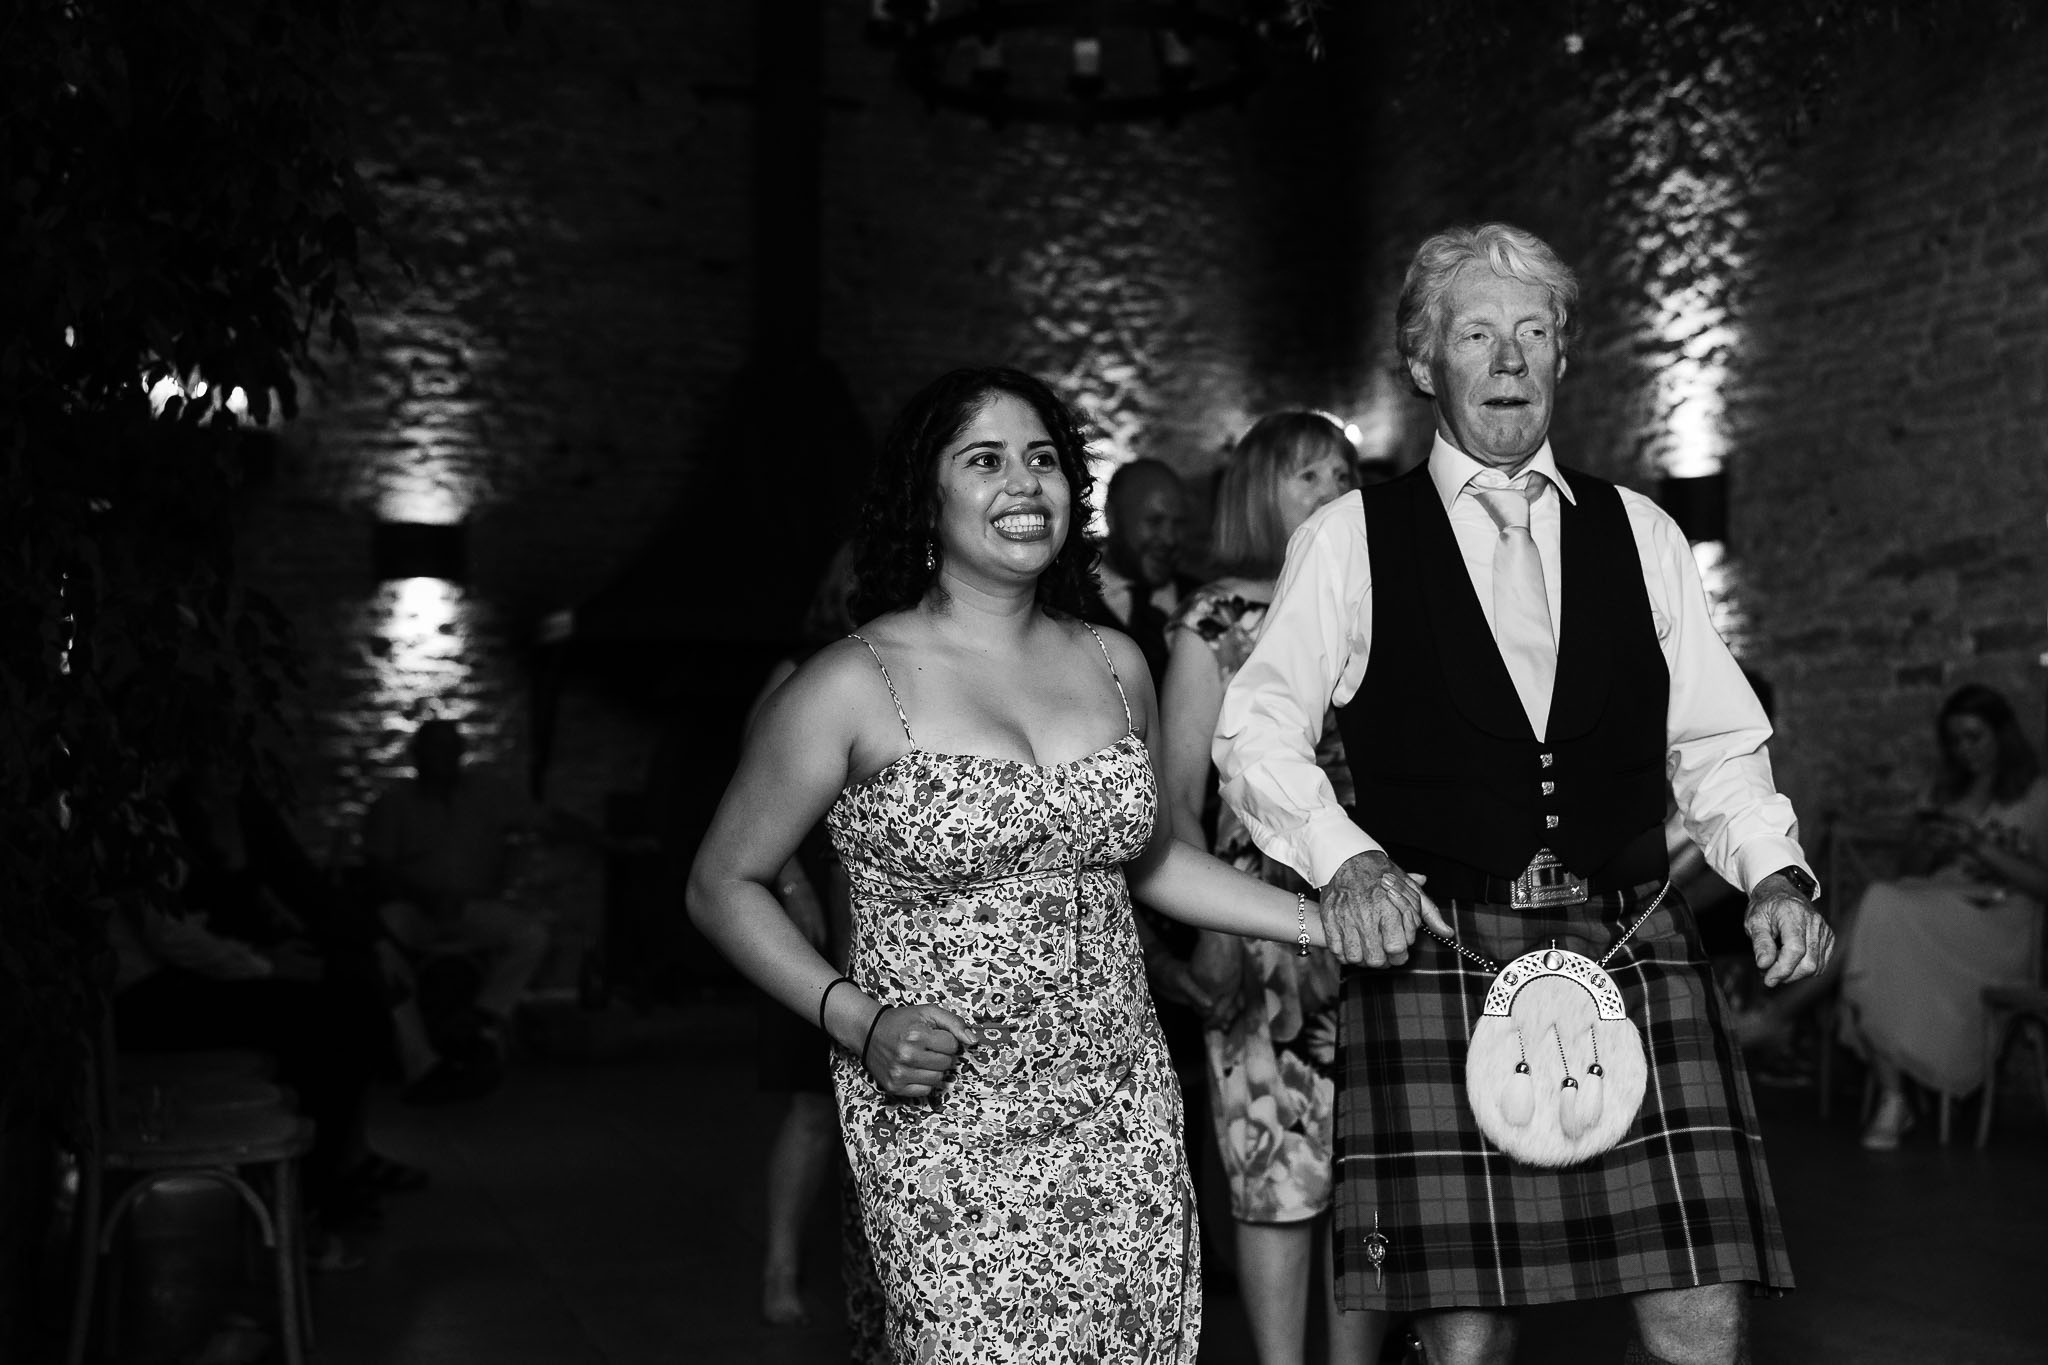 Scottish Wedding Dancing in a barn